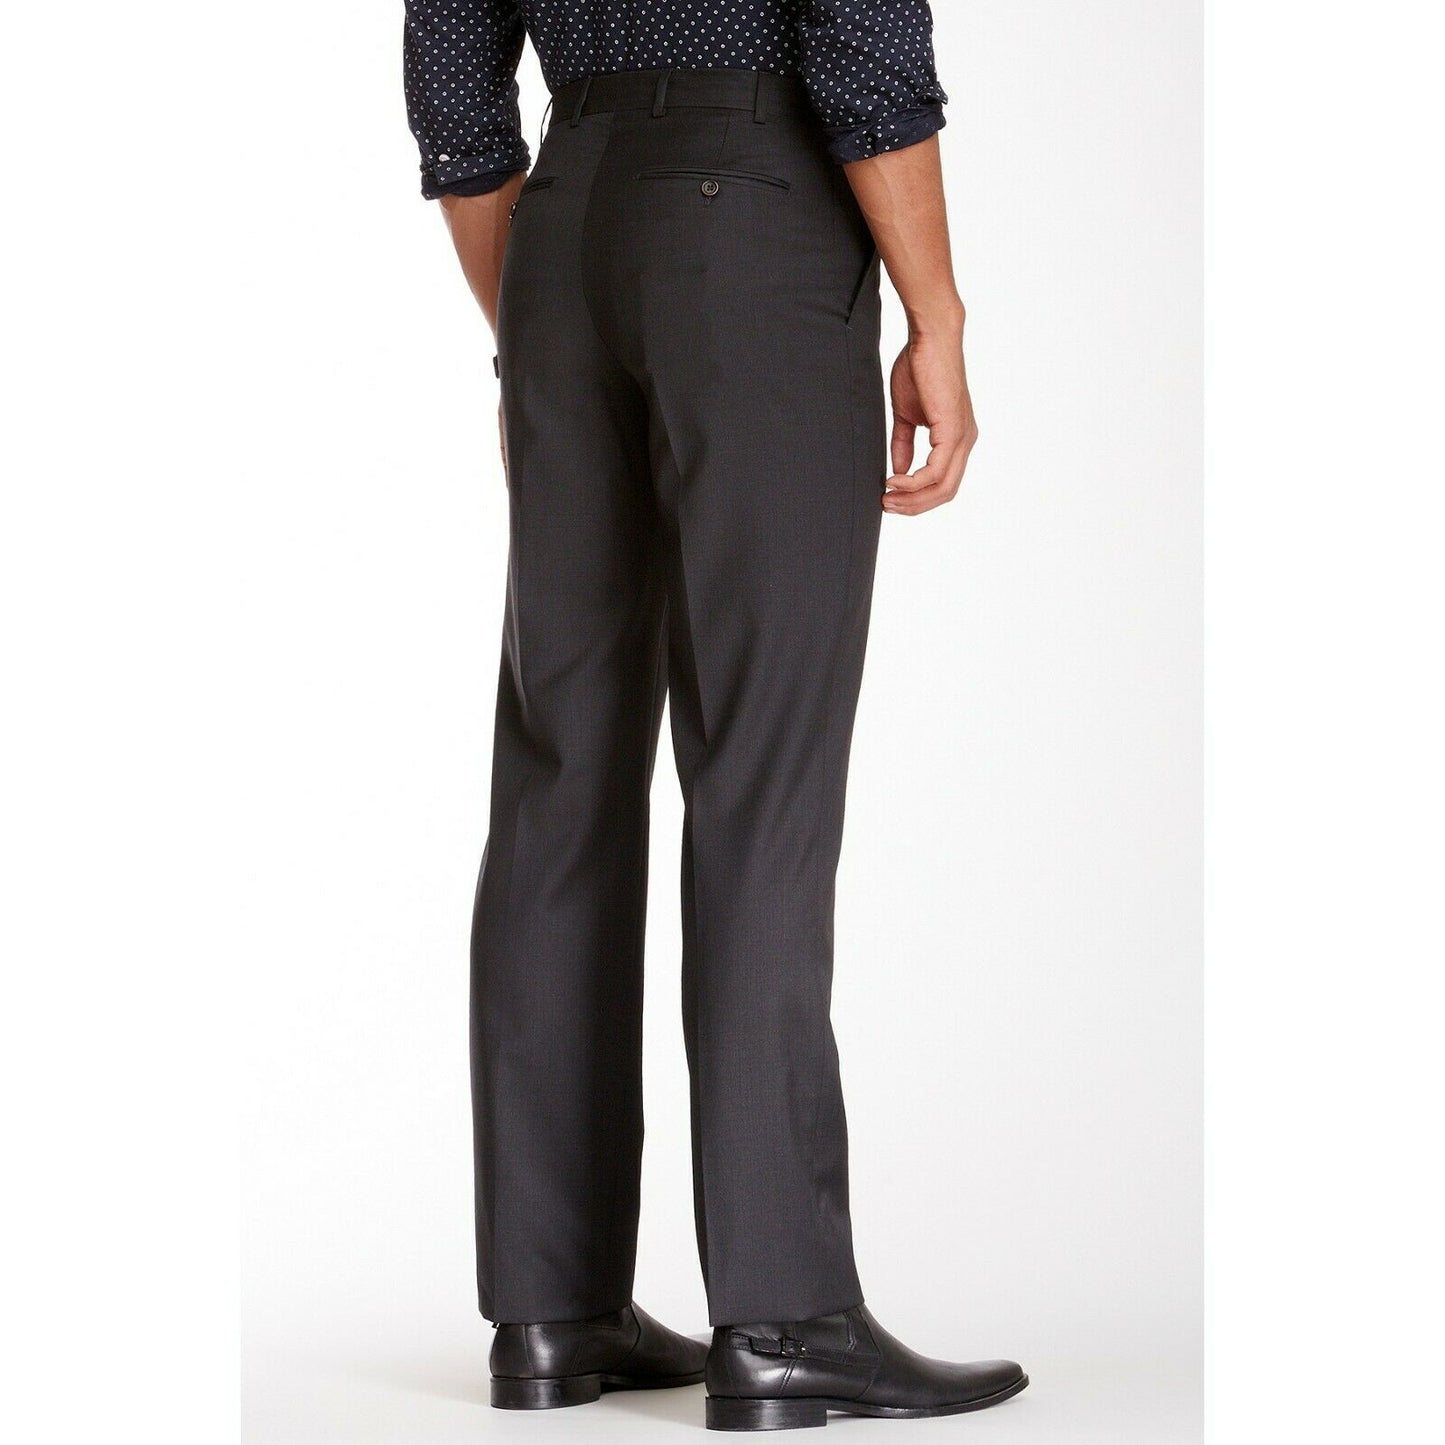 Ike Behar Mens Charcoal Grey Wool Flat Front Dress Suit Slacks Pants 40 NWT